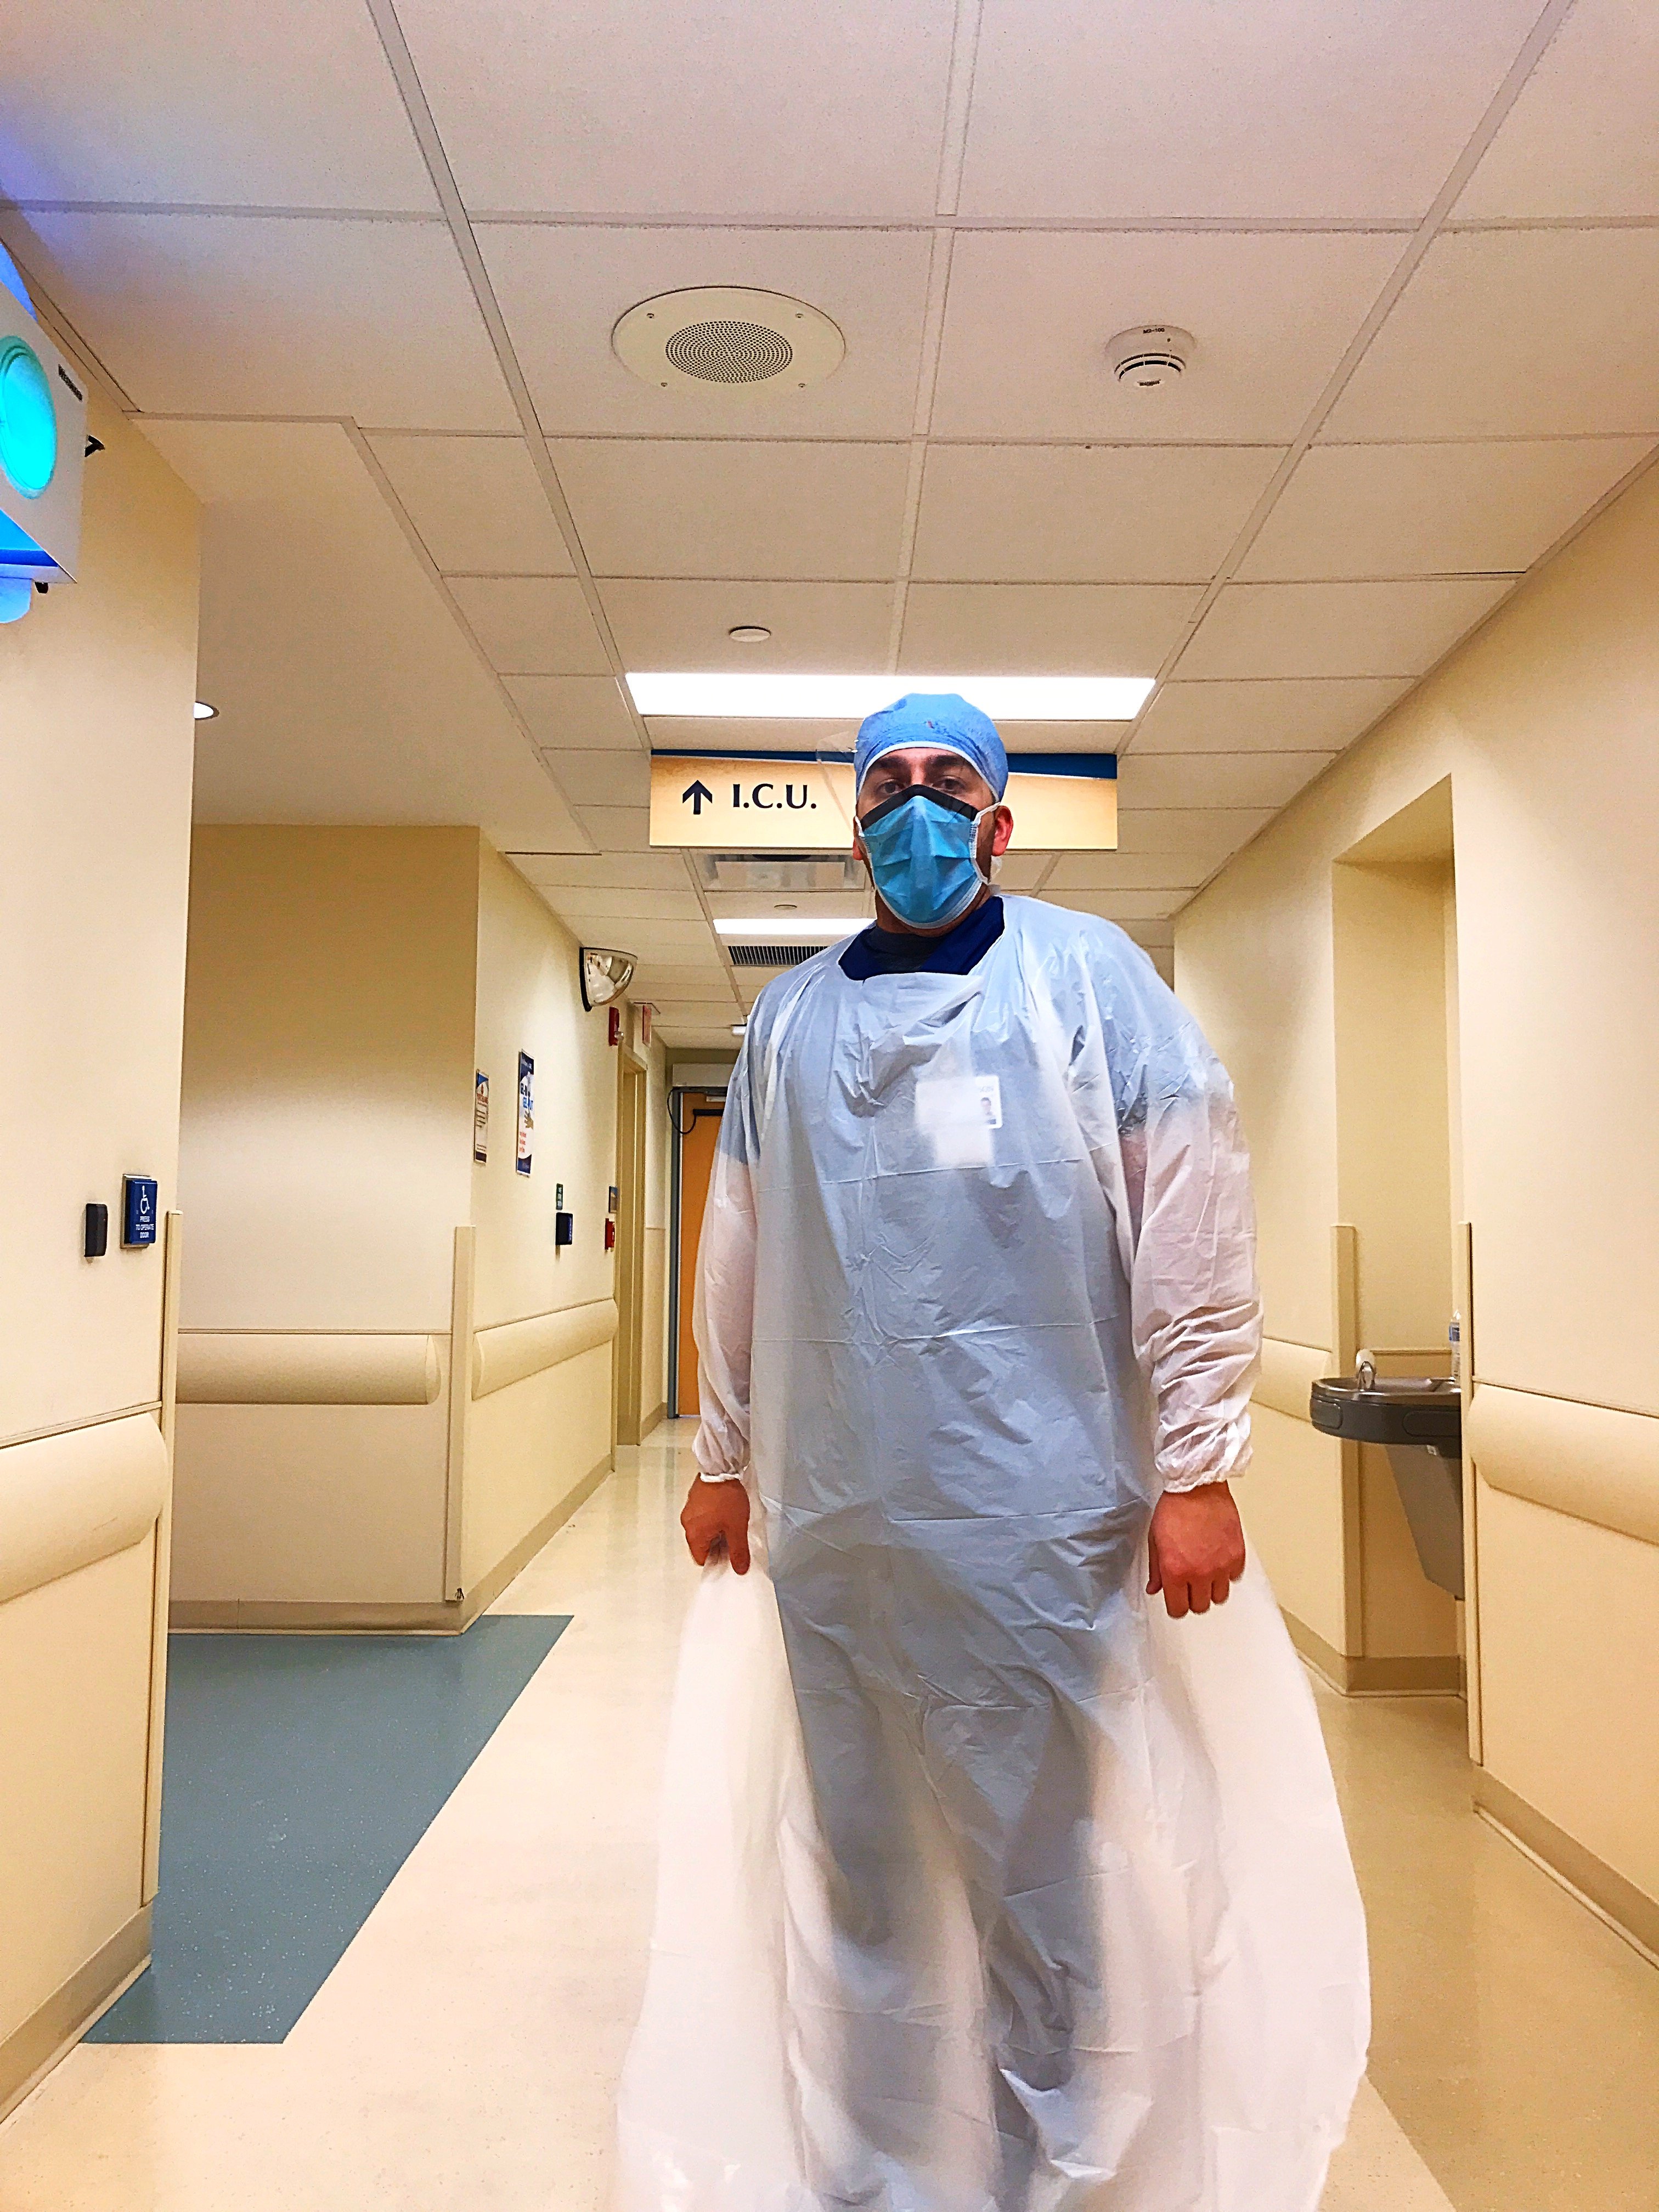 Jared preparing to enter ICU